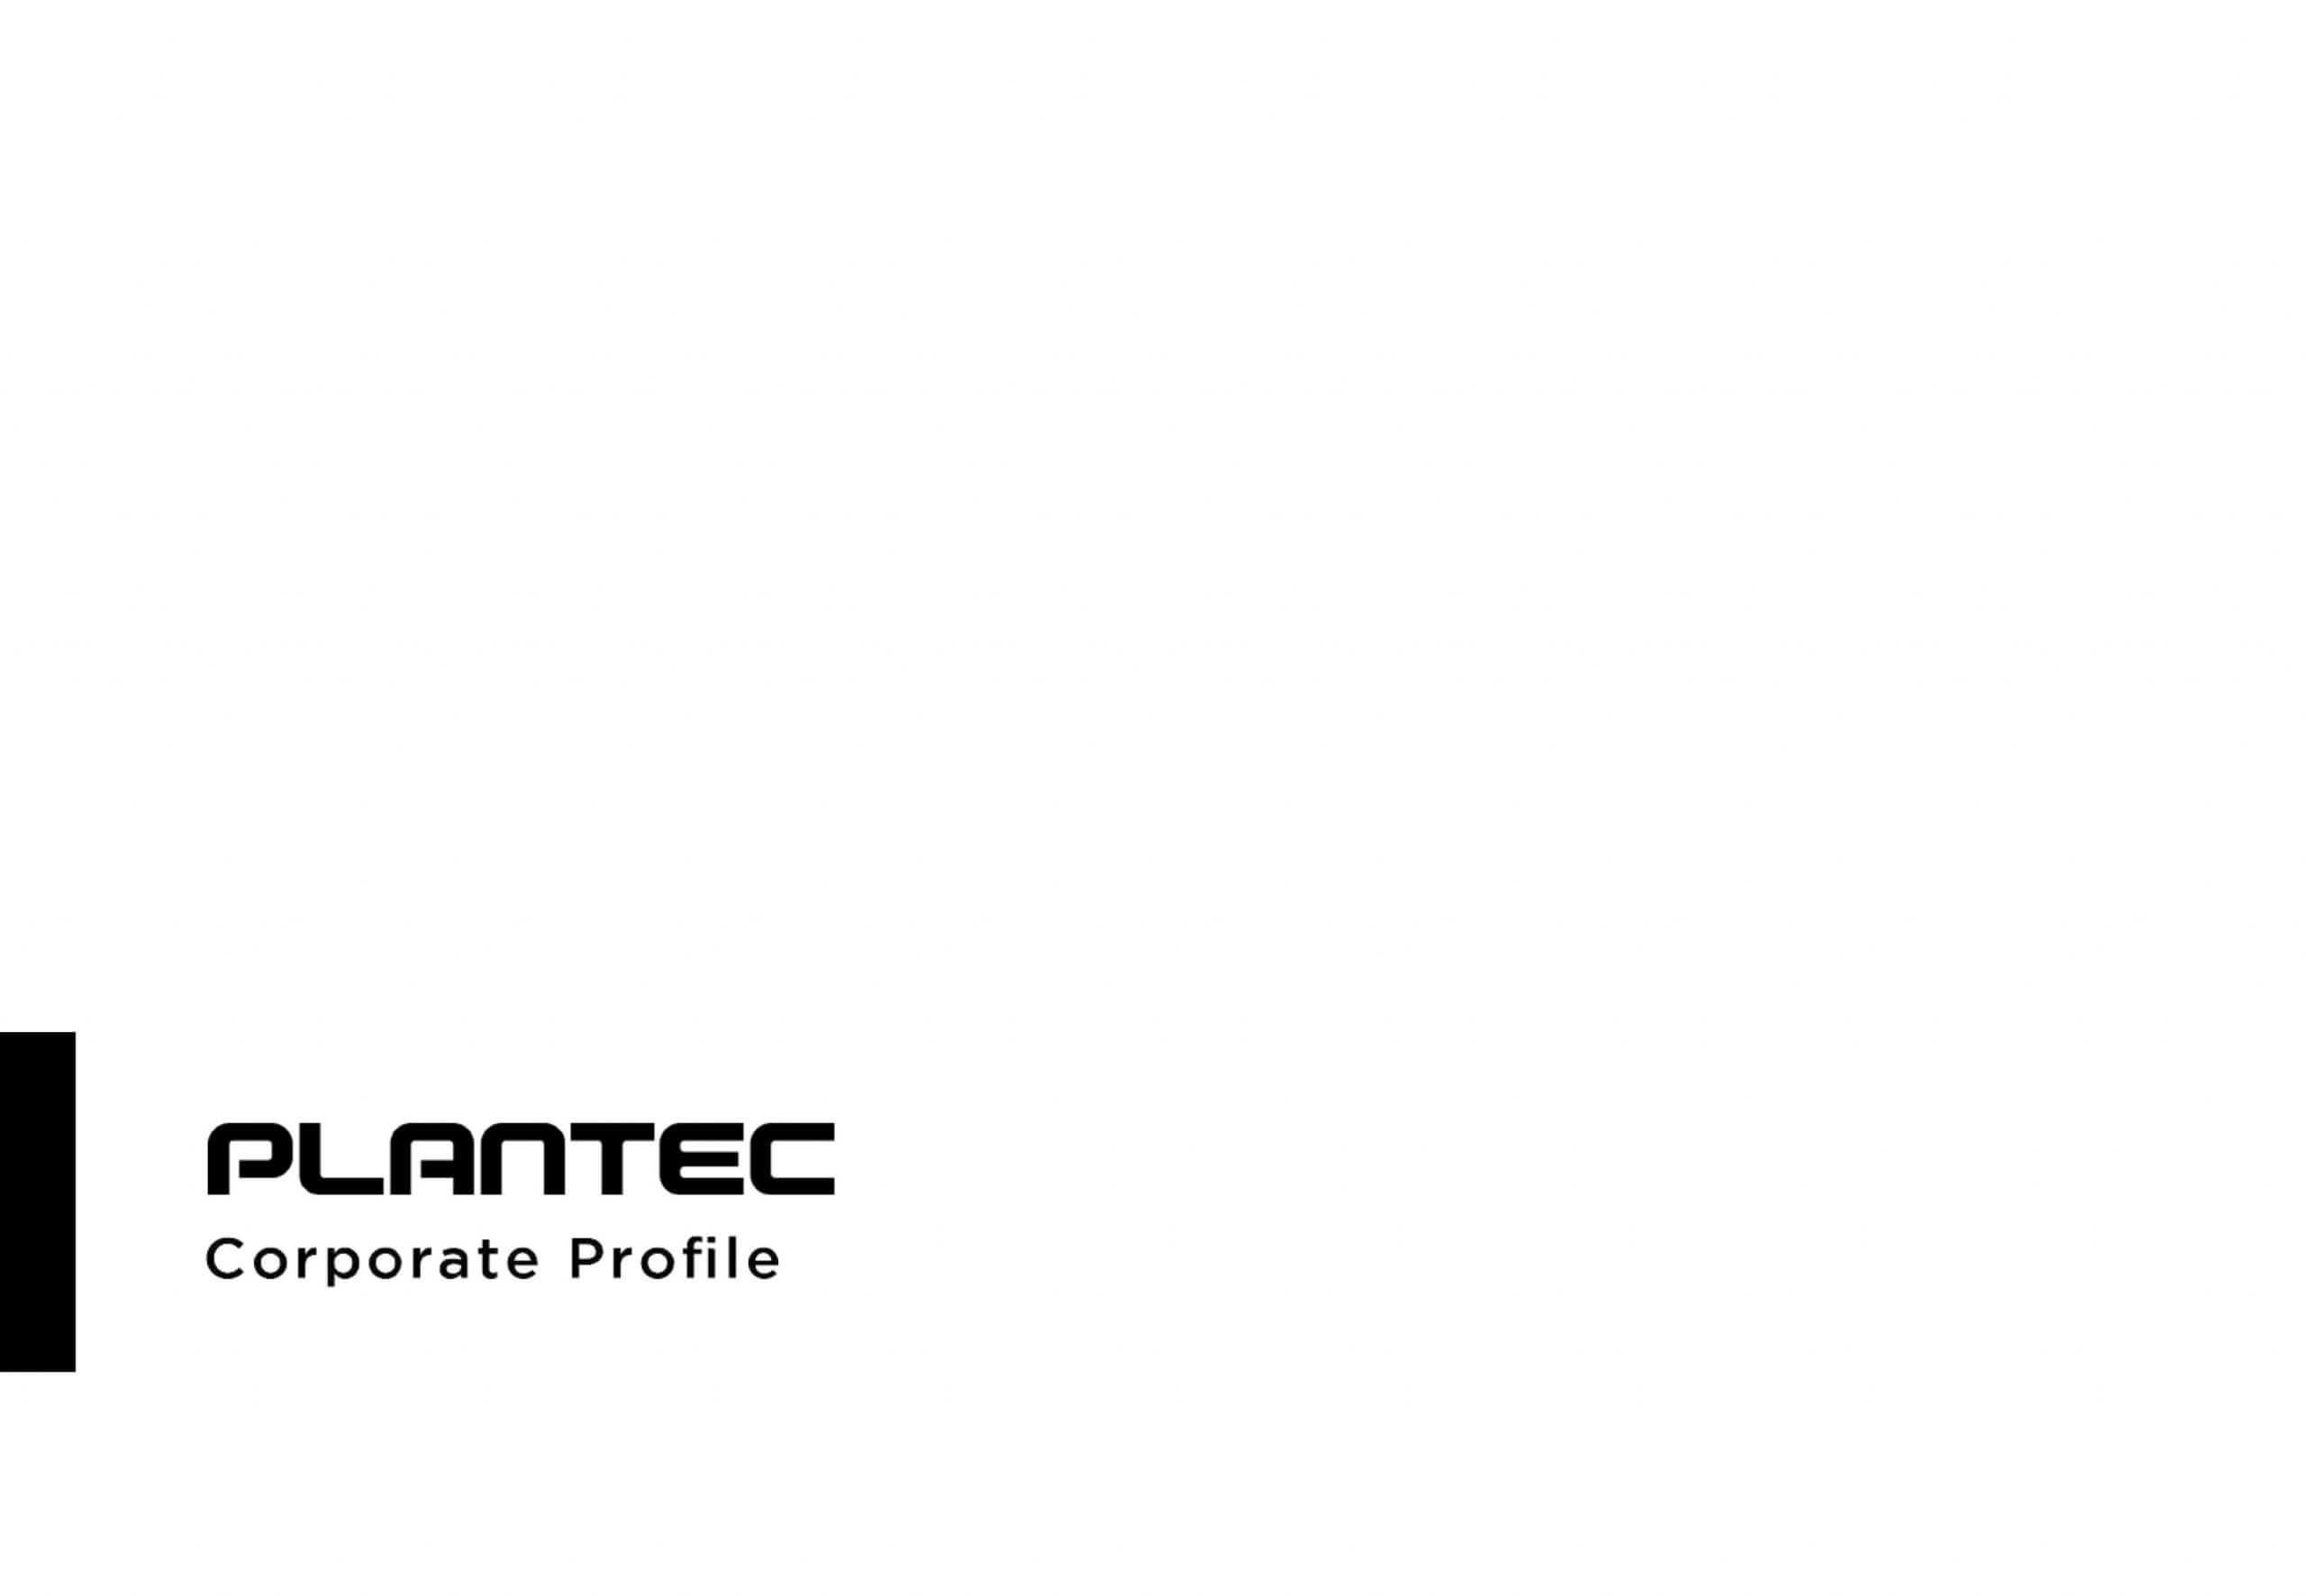 Plantec Corporate Profile